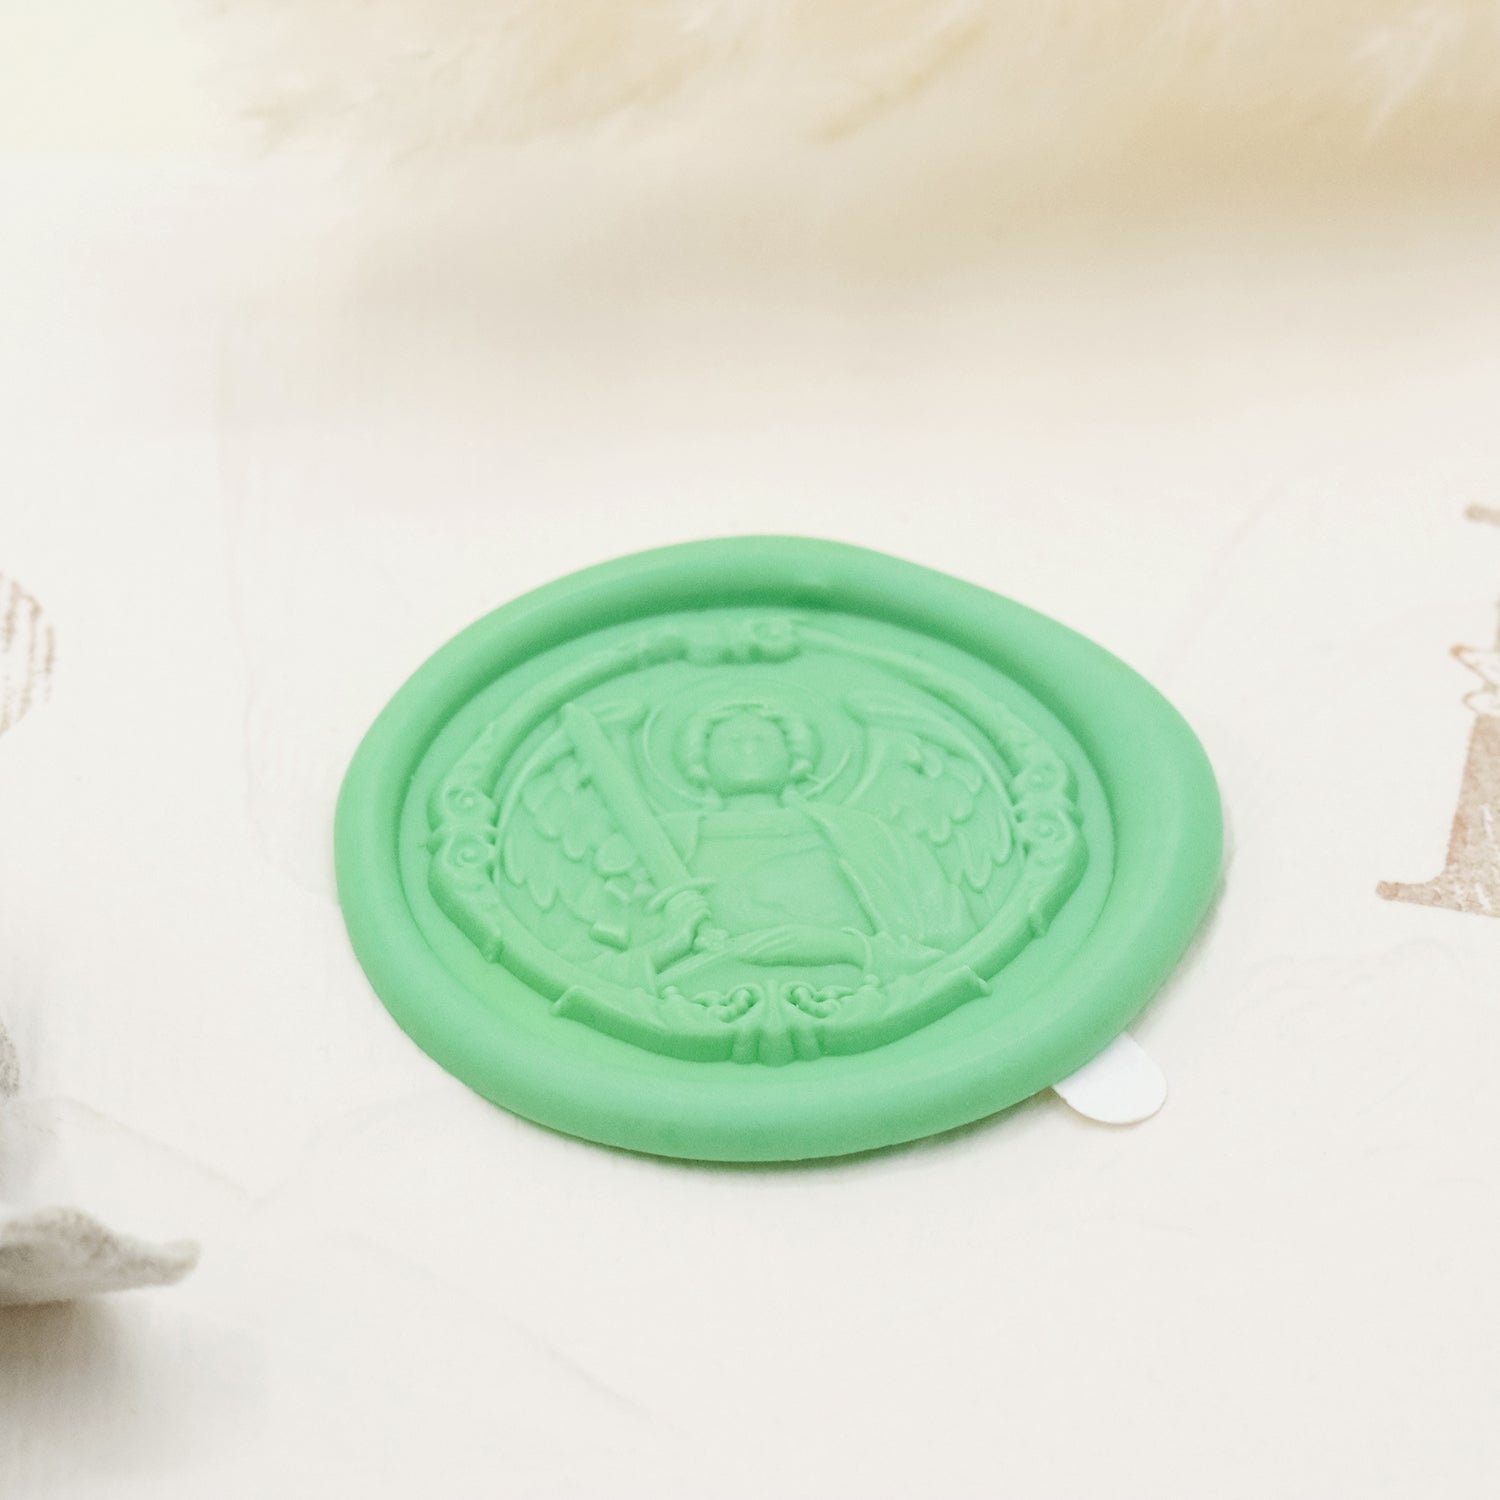 Stamprints 3D Relief Archangel Michael Self-adhesive Wax Seal Stickers 3Stamprints Self-adhesive Wax Seal Stickers Color 4